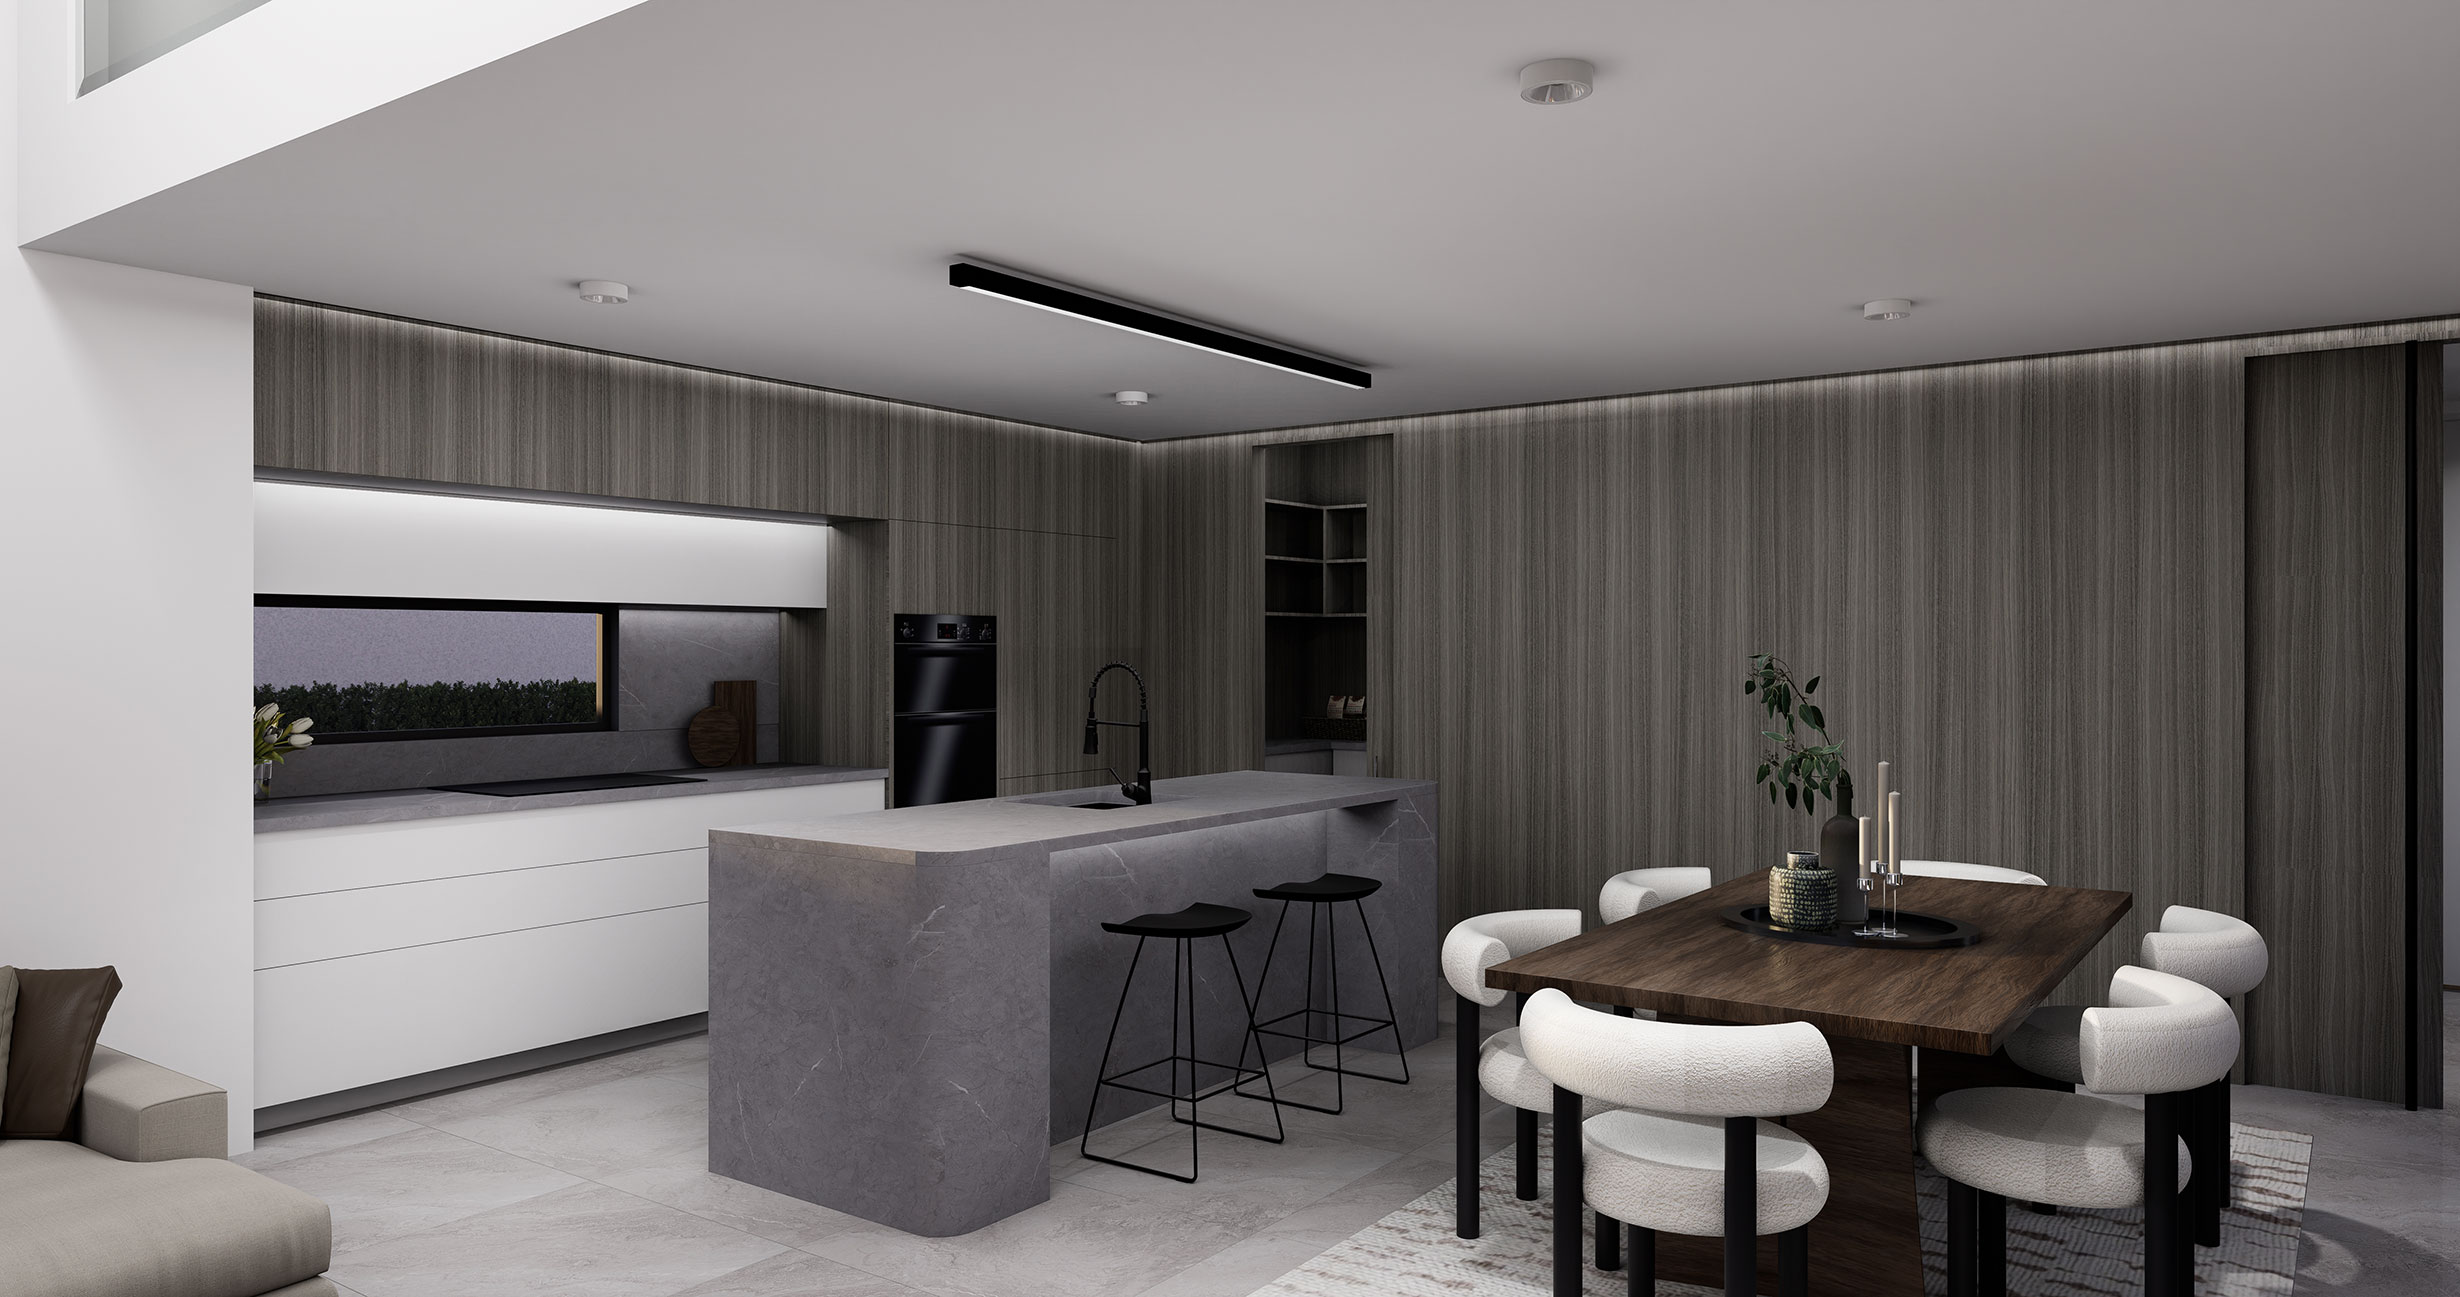 Hallmark Homes Prestige Series Cheviot House Plan Kitchen and Dining Room View Design Christchurch NZ.